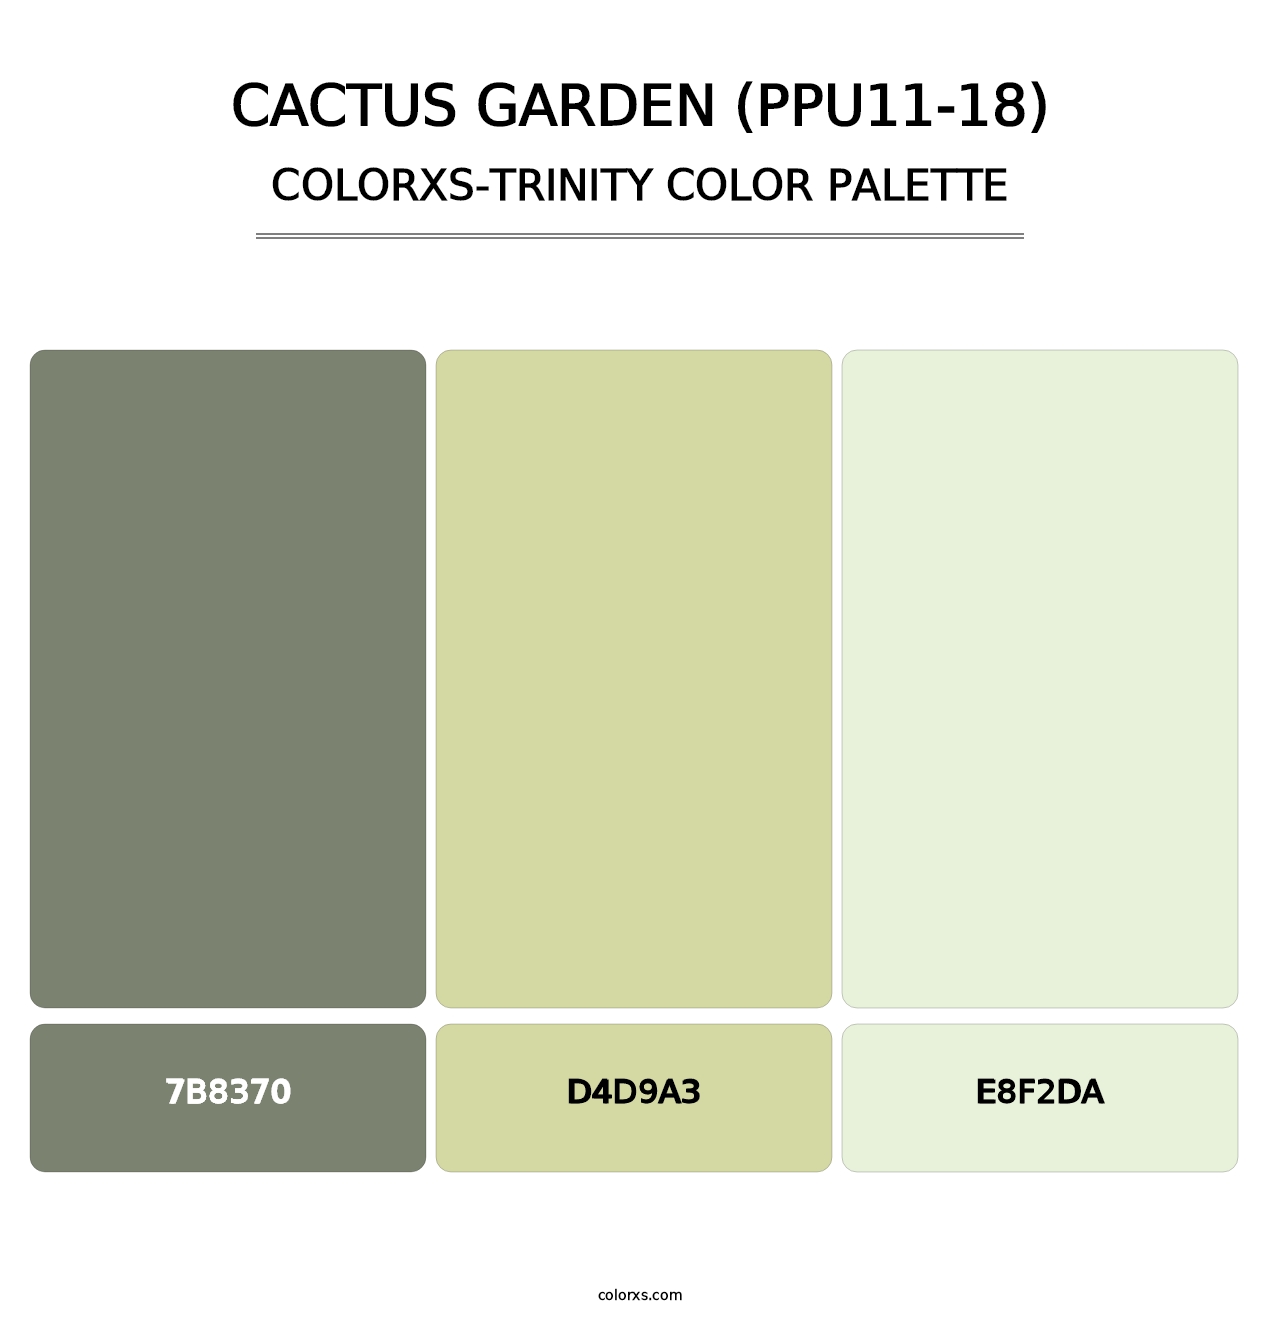 Cactus Garden (PPU11-18) - Colorxs Trinity Palette